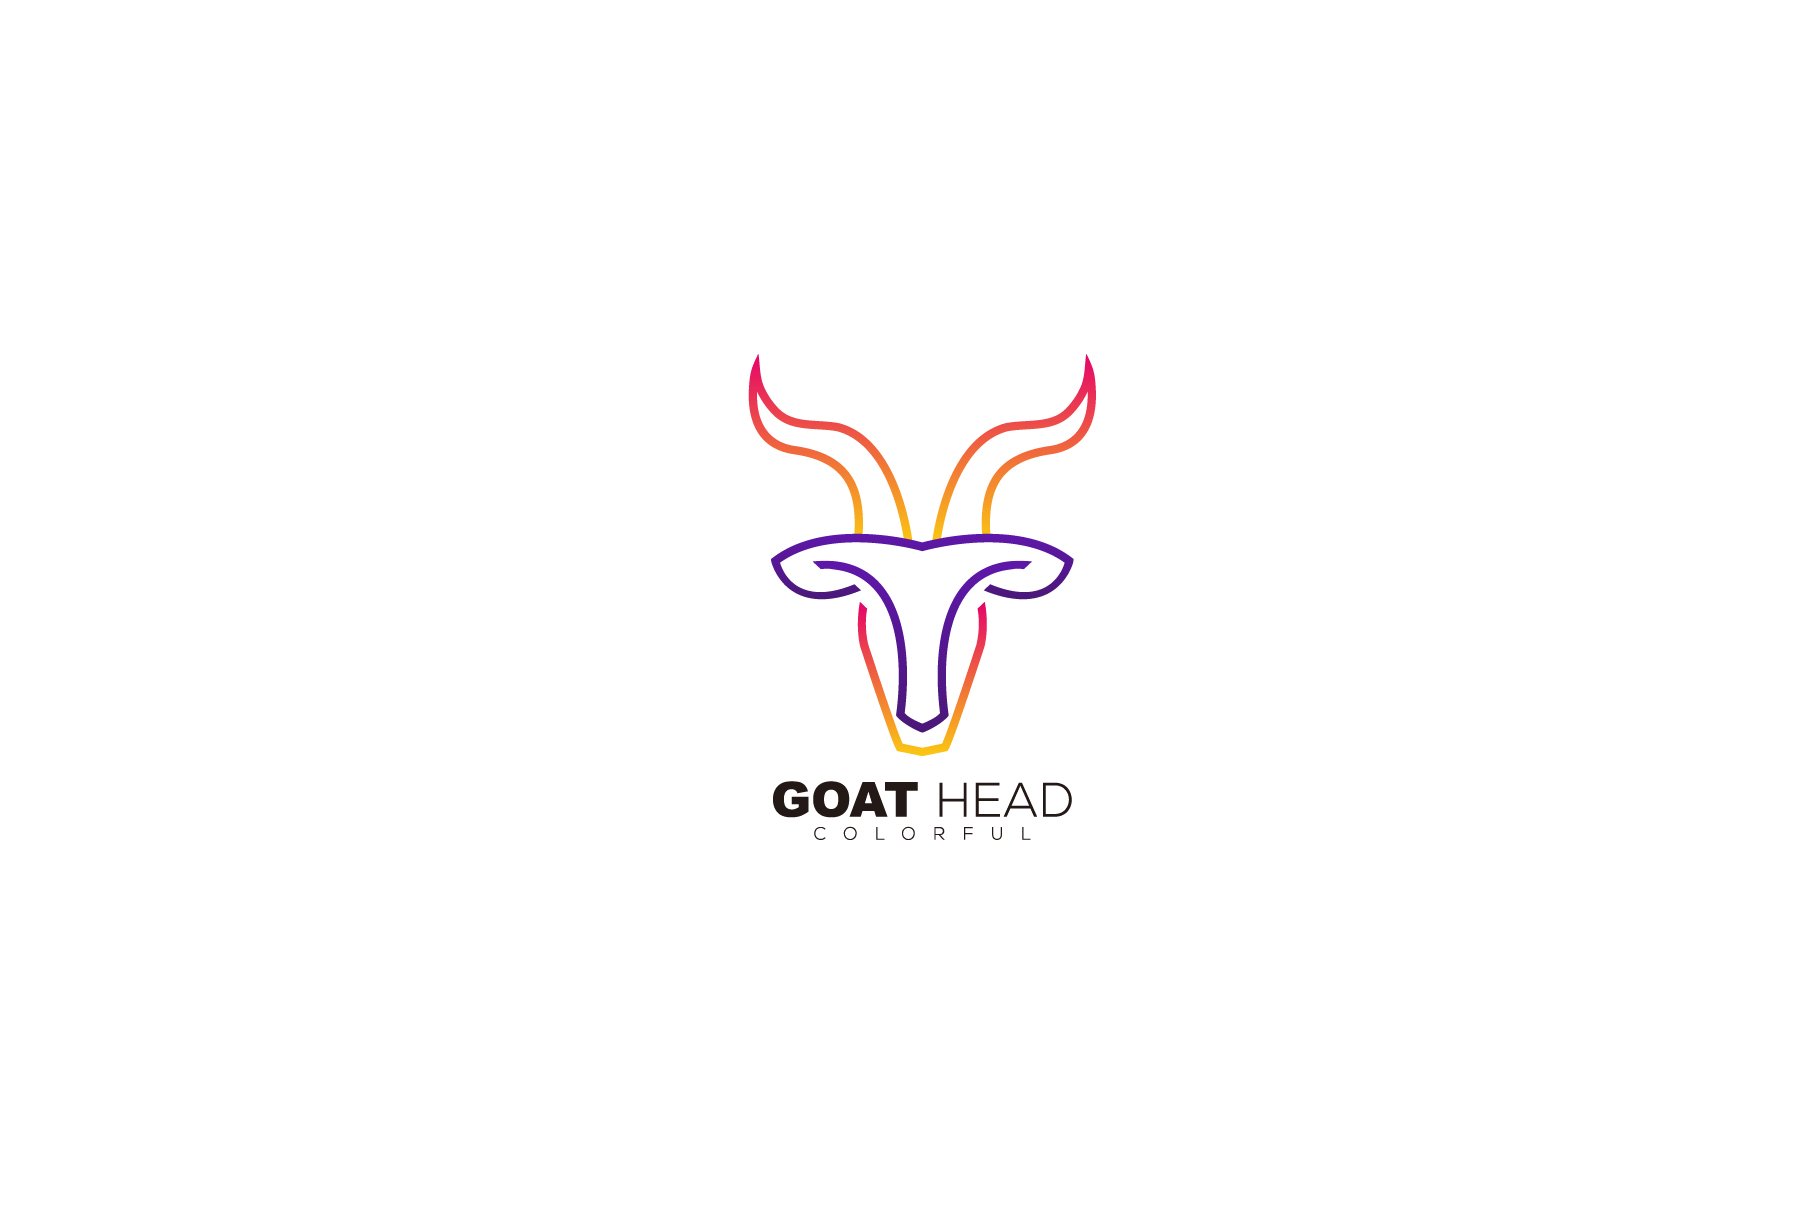 line art goat head logo template cover image.